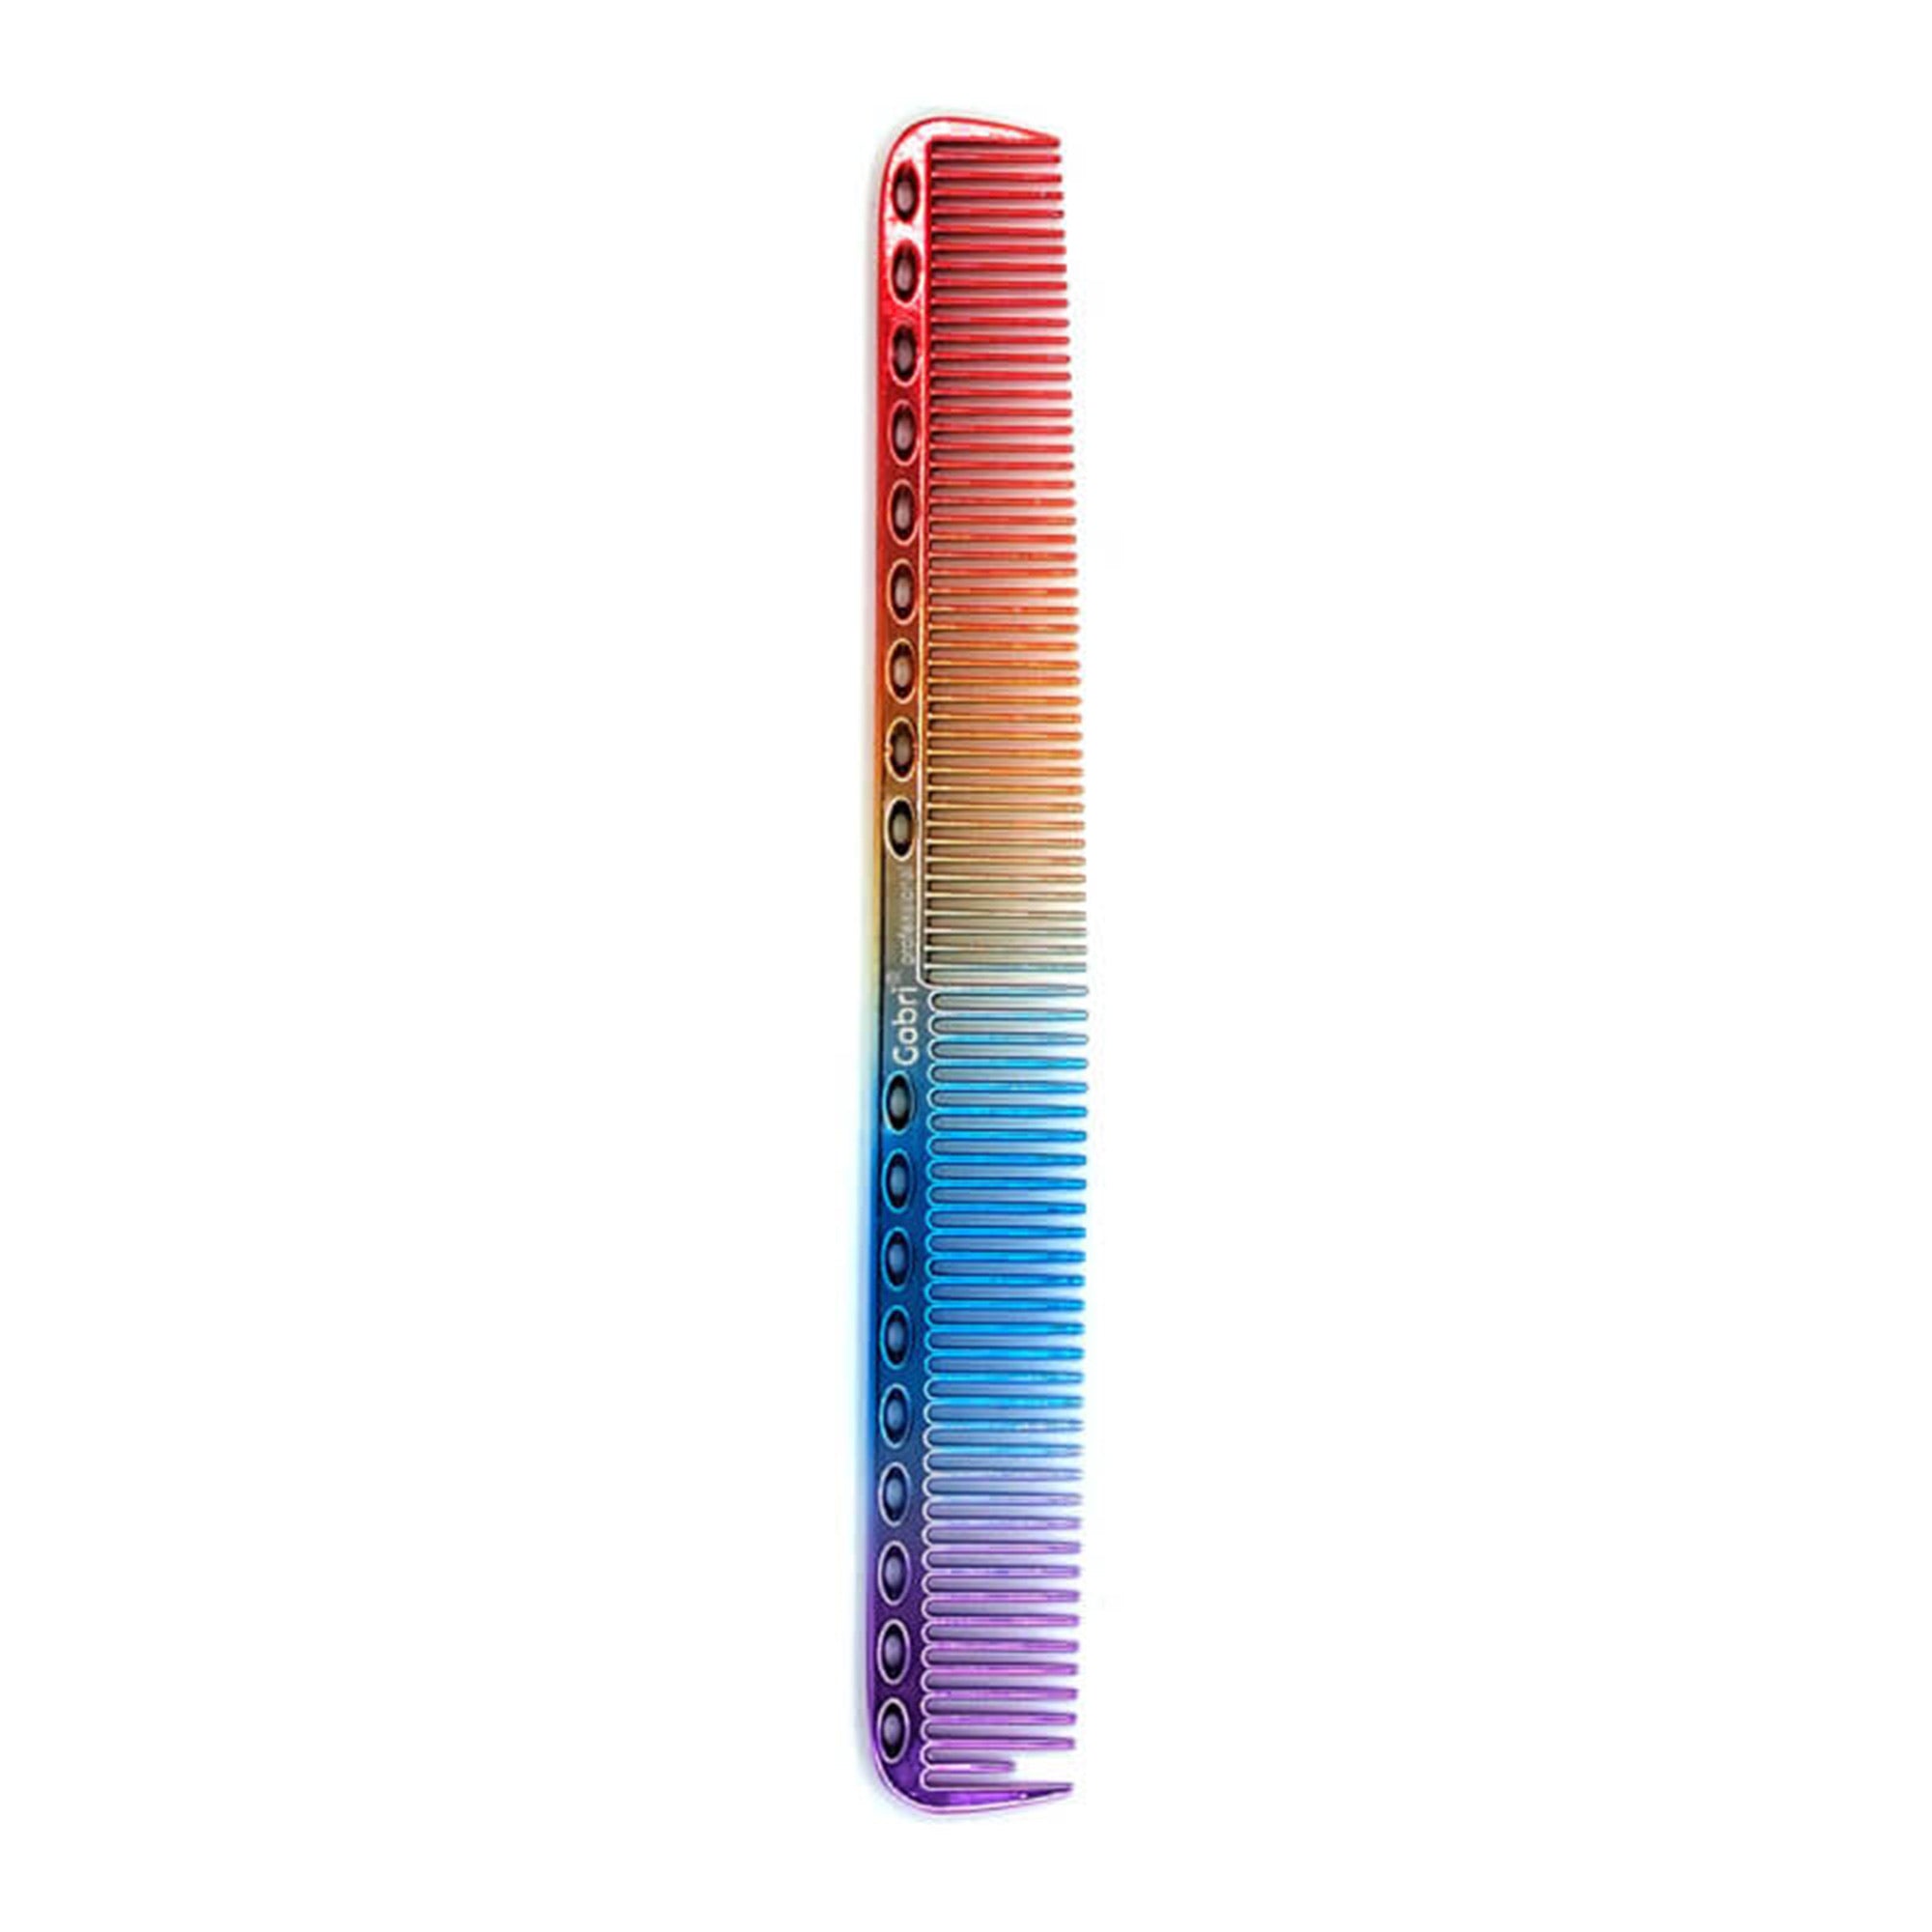 Gabri - Metal Cutting Comb Rainbow 21cm